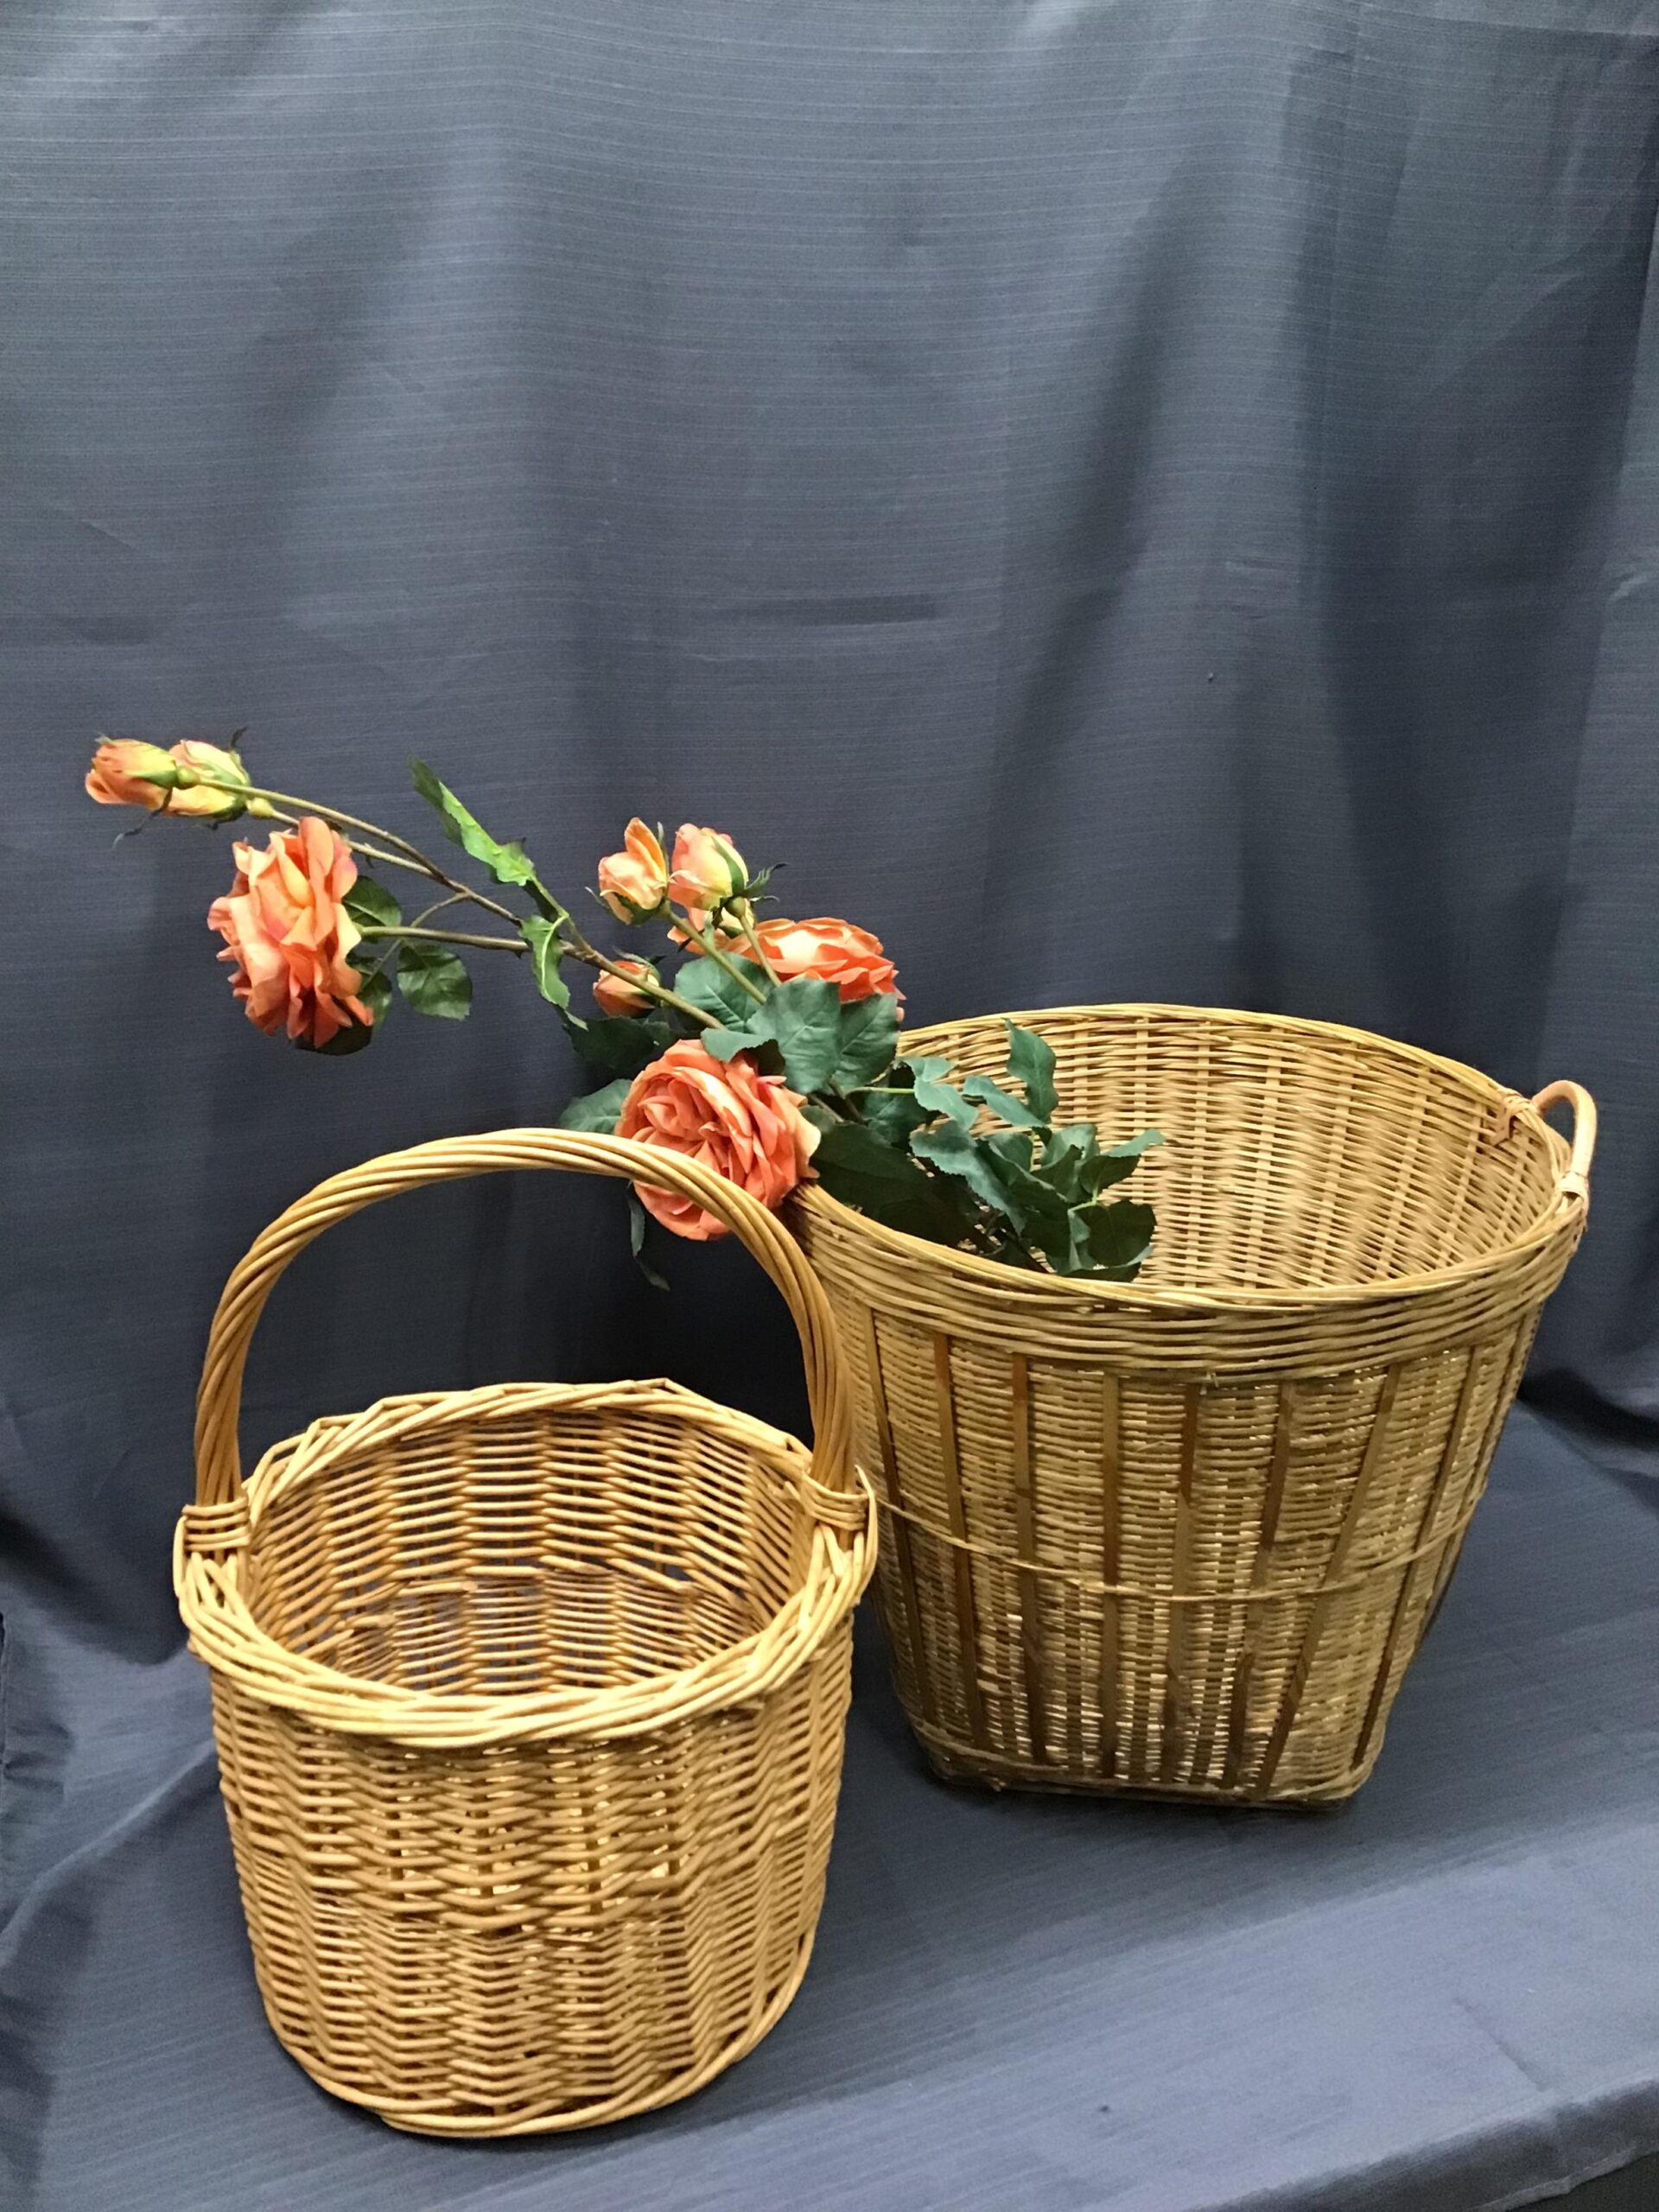 Set of 2 Baskets with Orange Roses